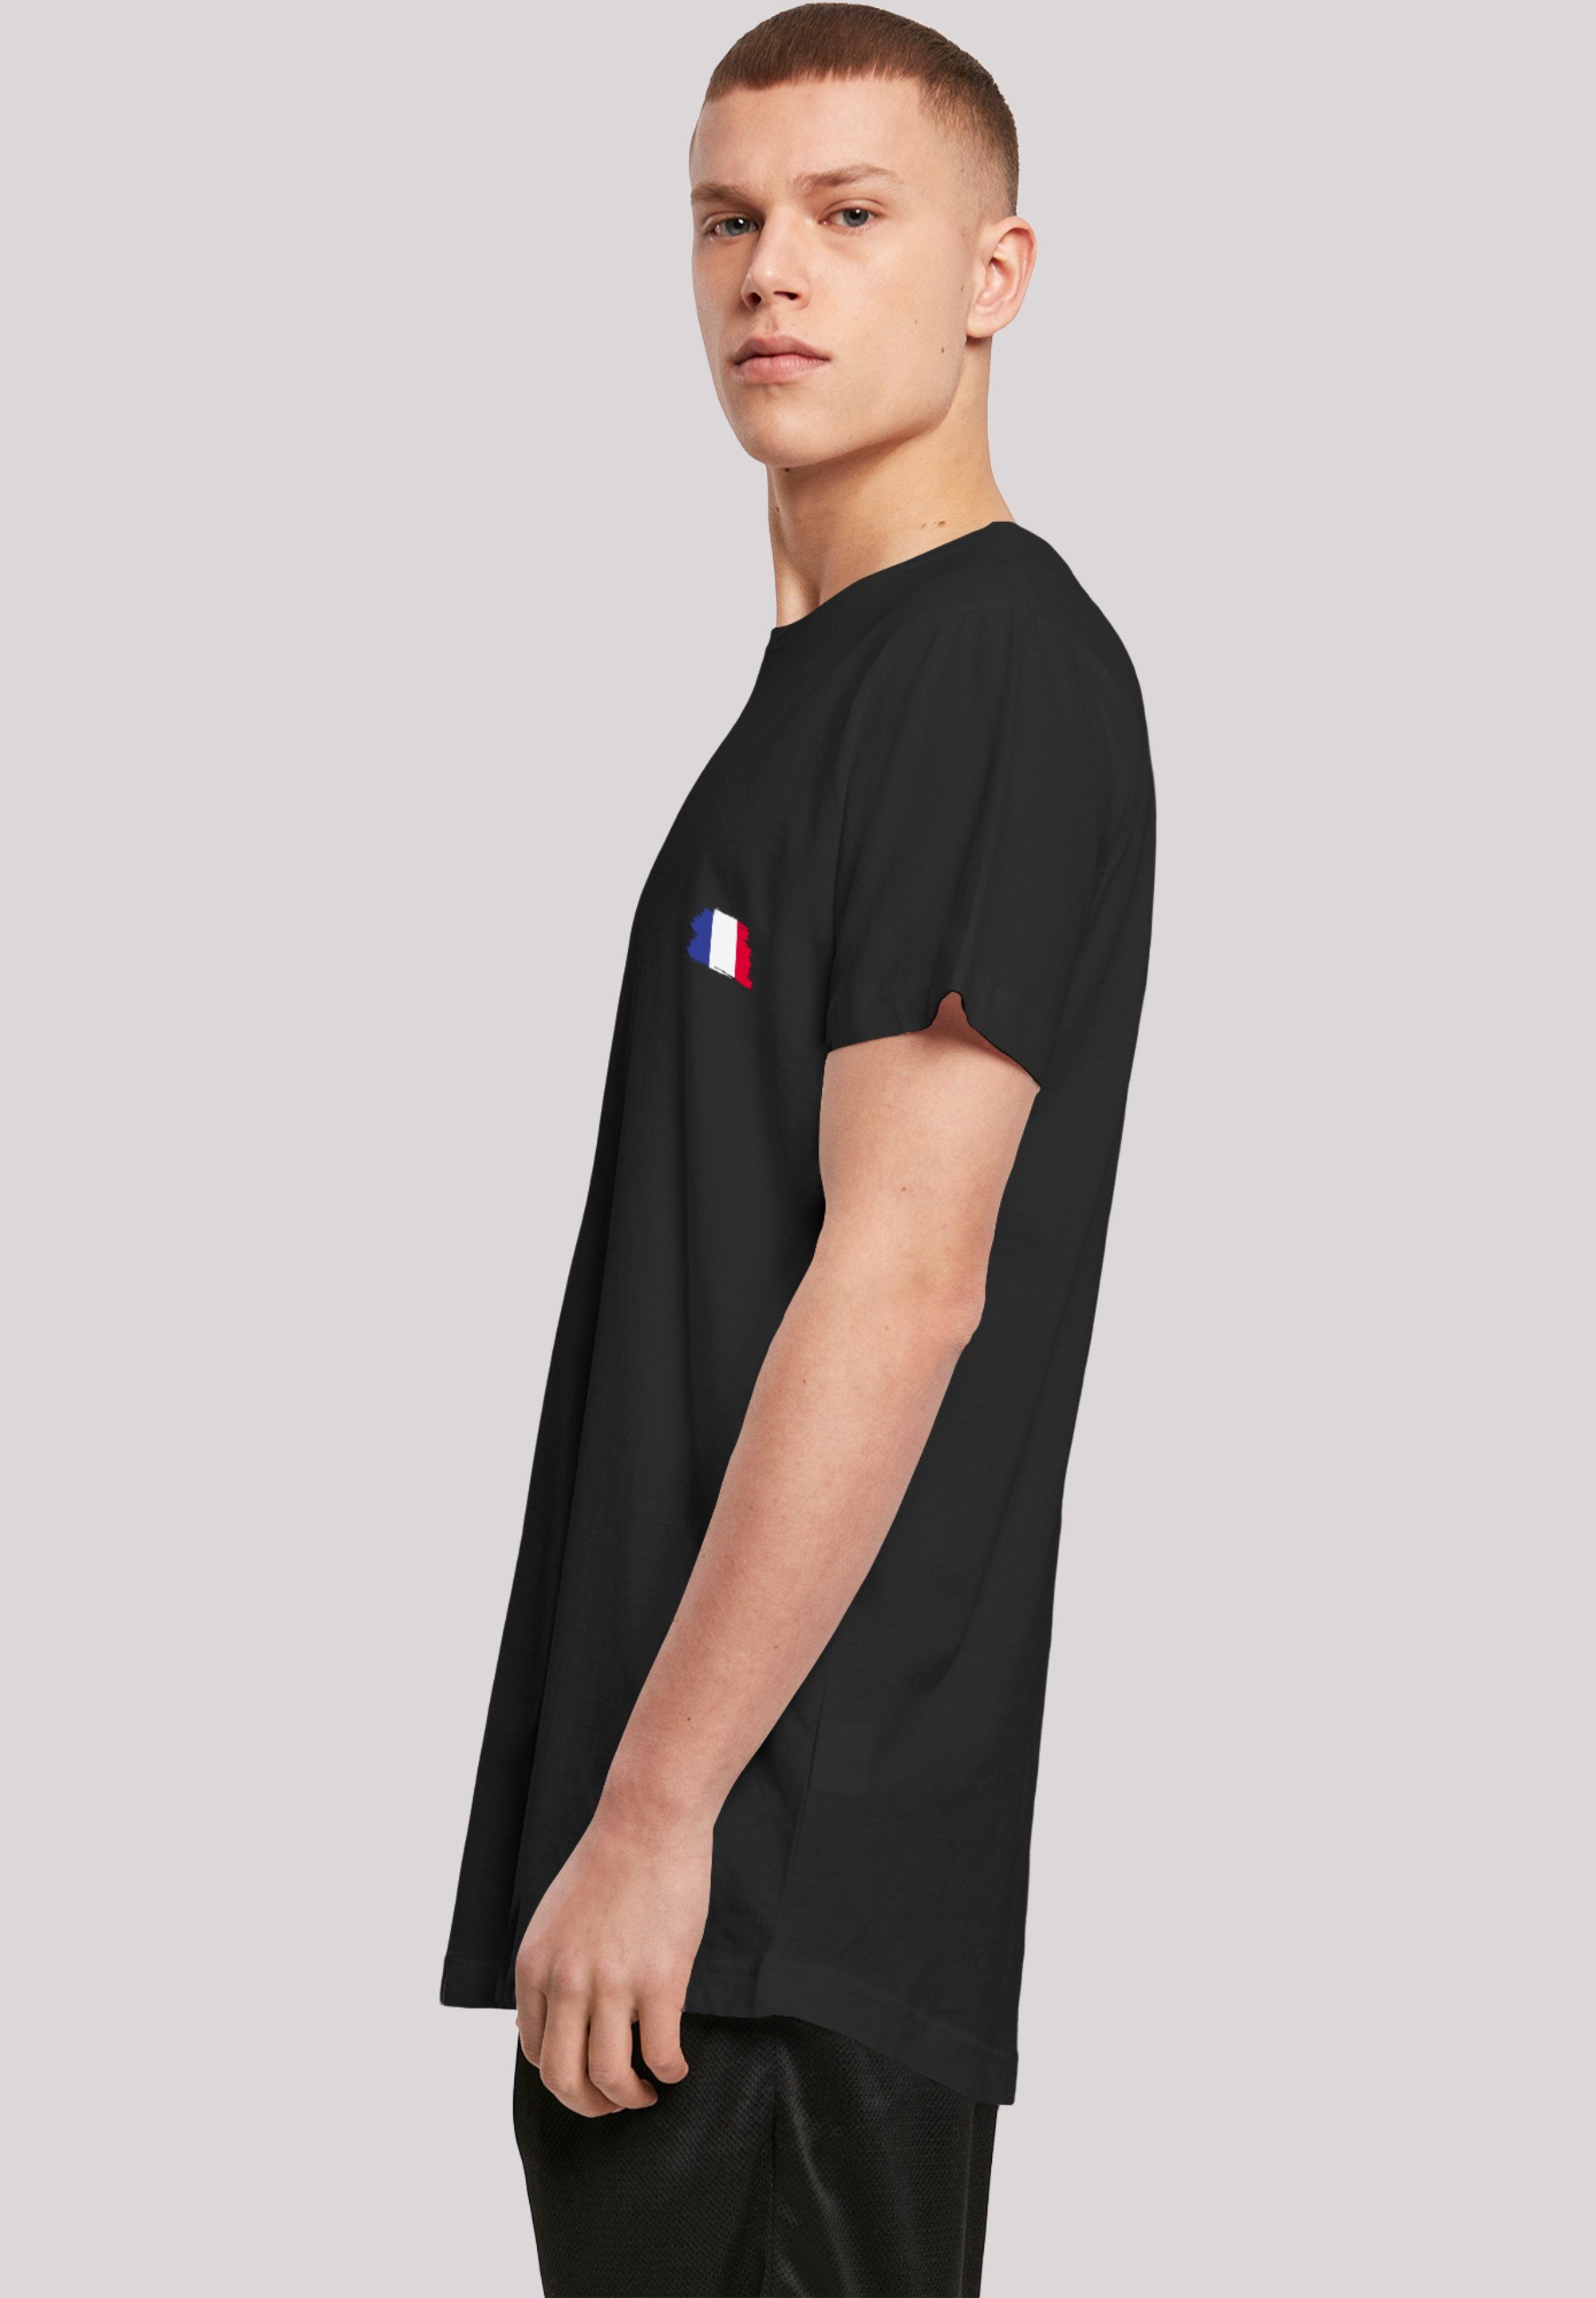 F4NT4STIC T-Shirt France Frankreich Print Flagge schwarz Fahne